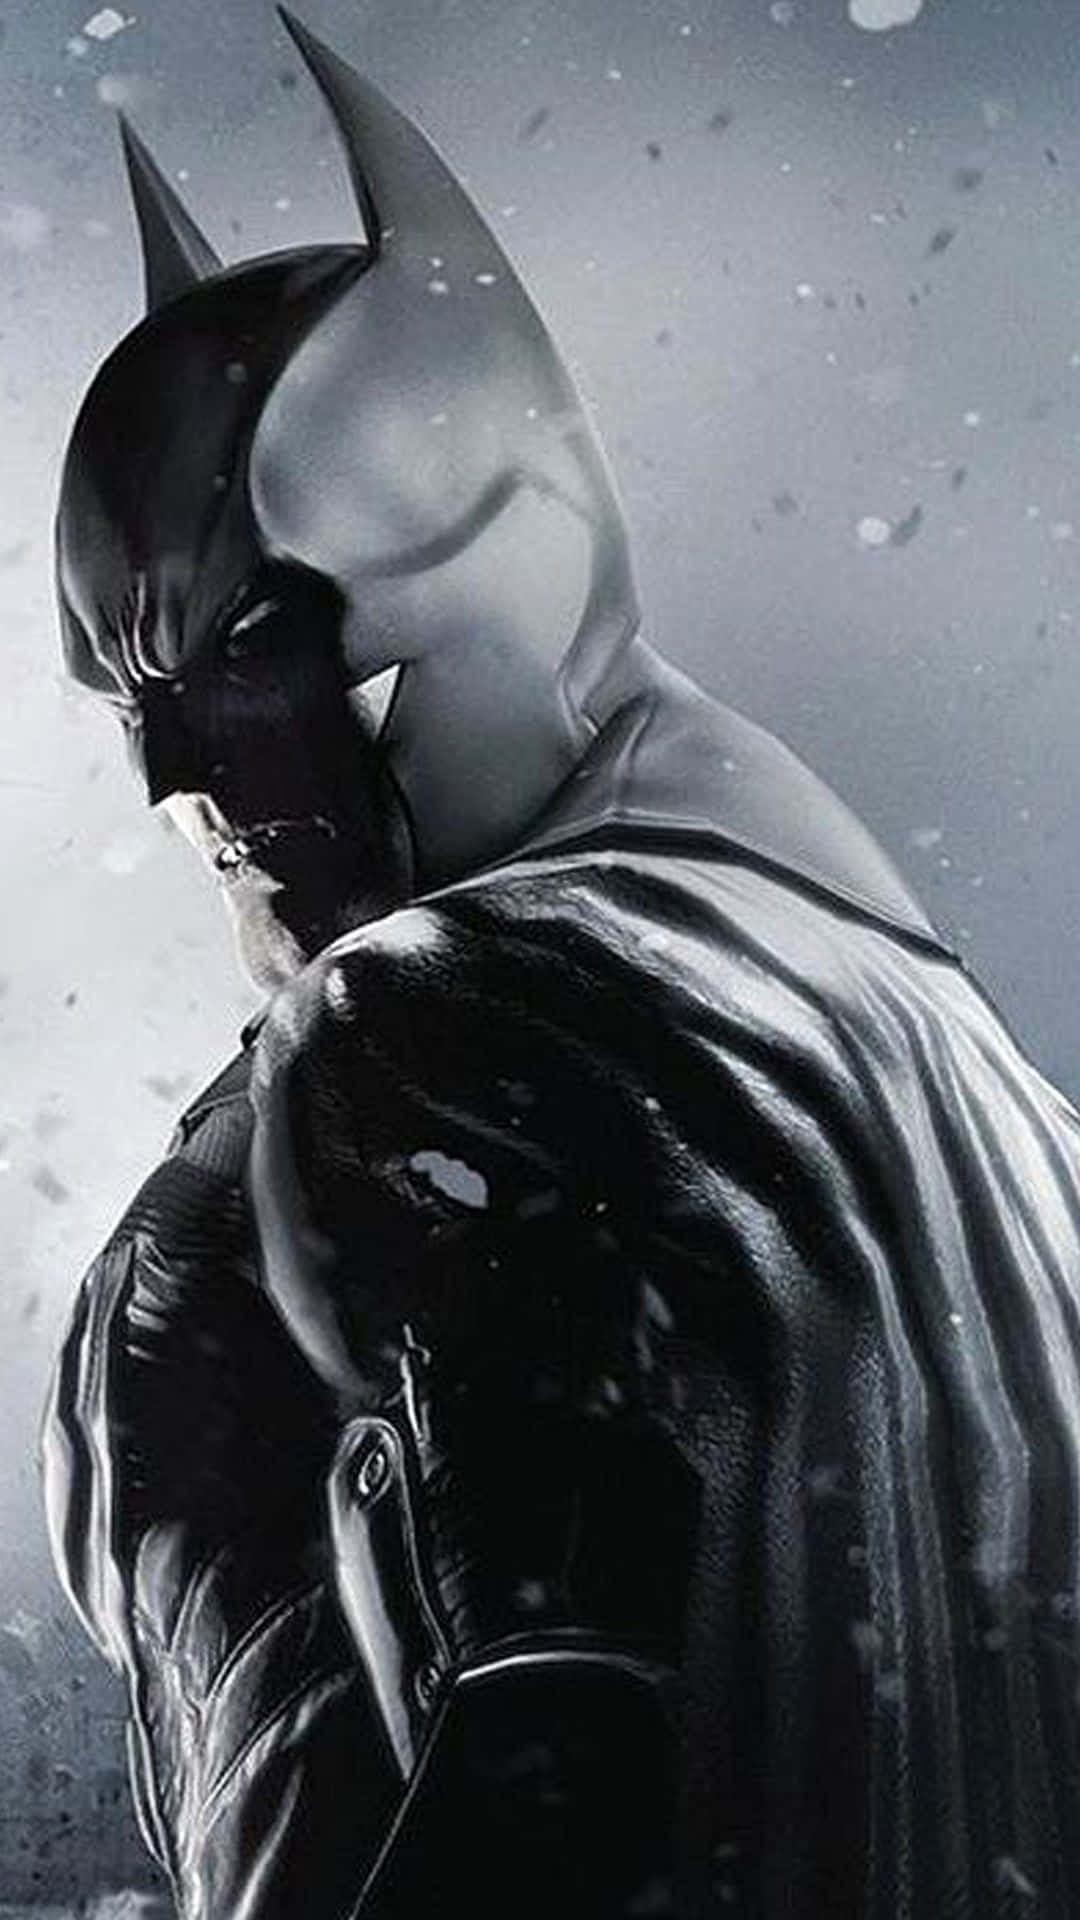 Batman Arkham Knight - Pc - Pc - Pc - Pc - Pc Wallpaper